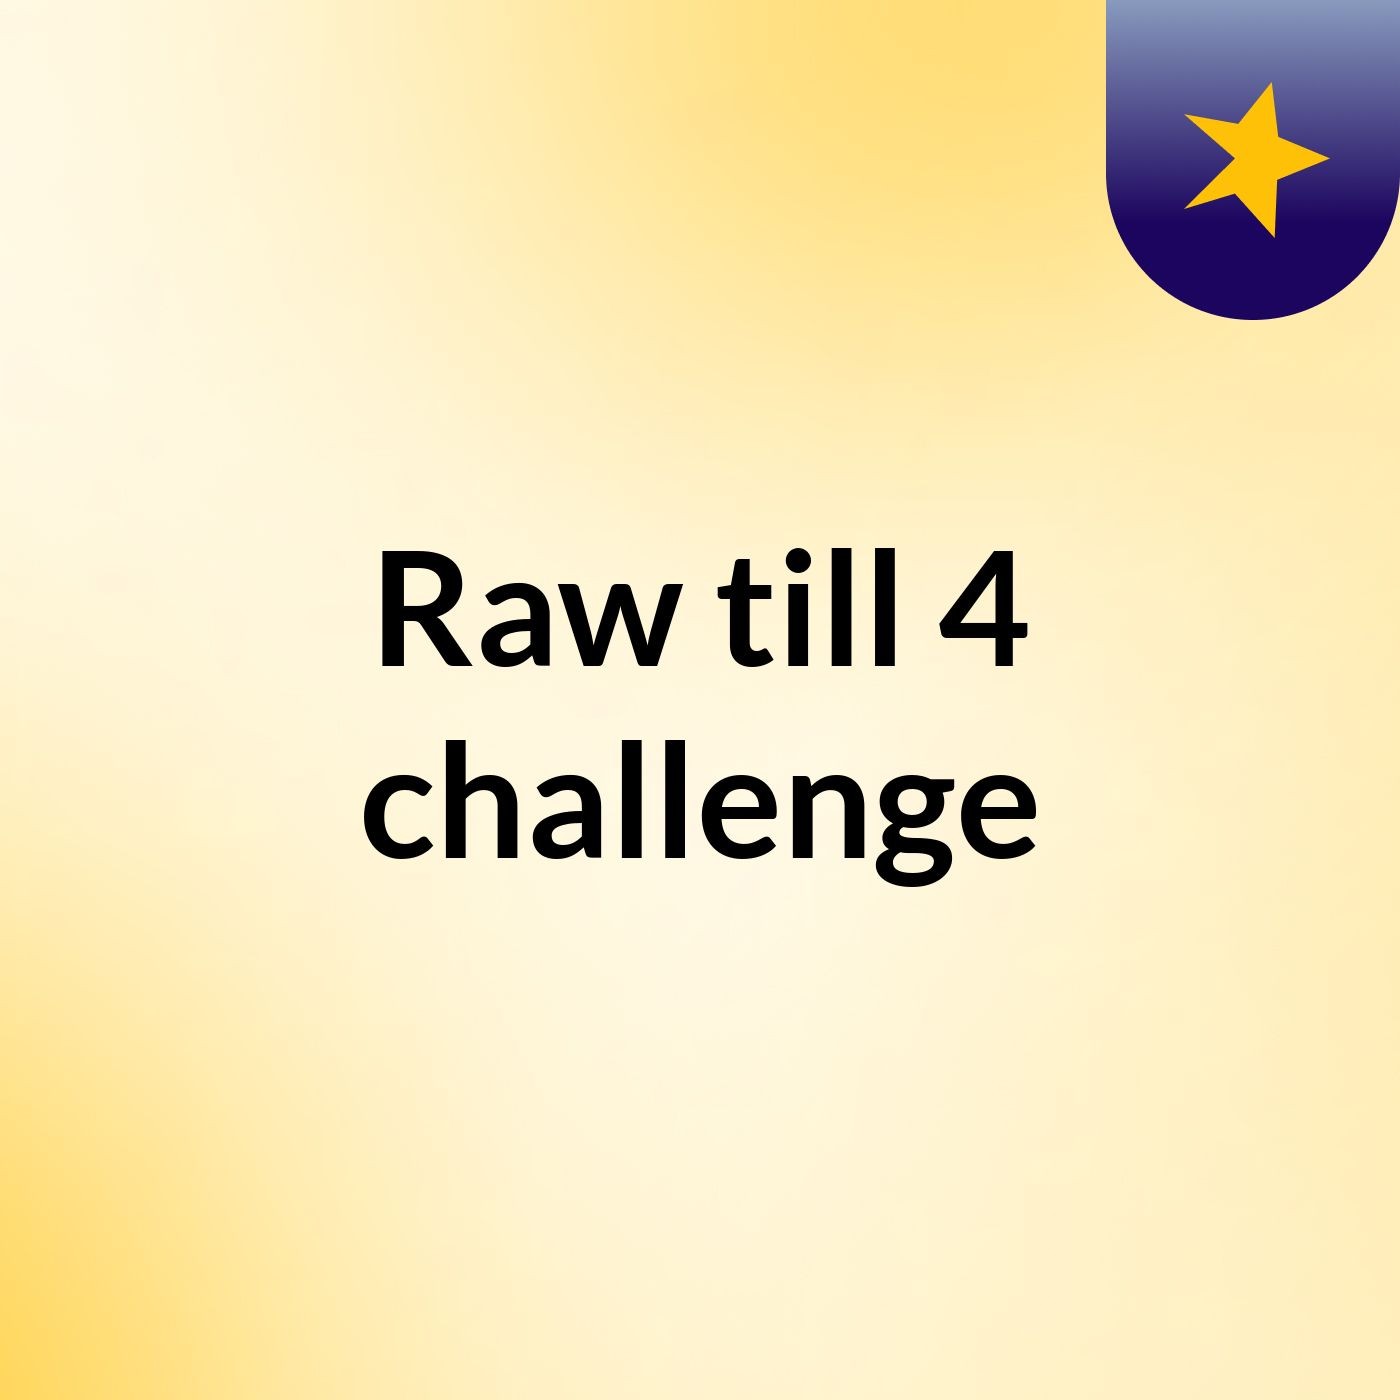 Raw till 4 challenge